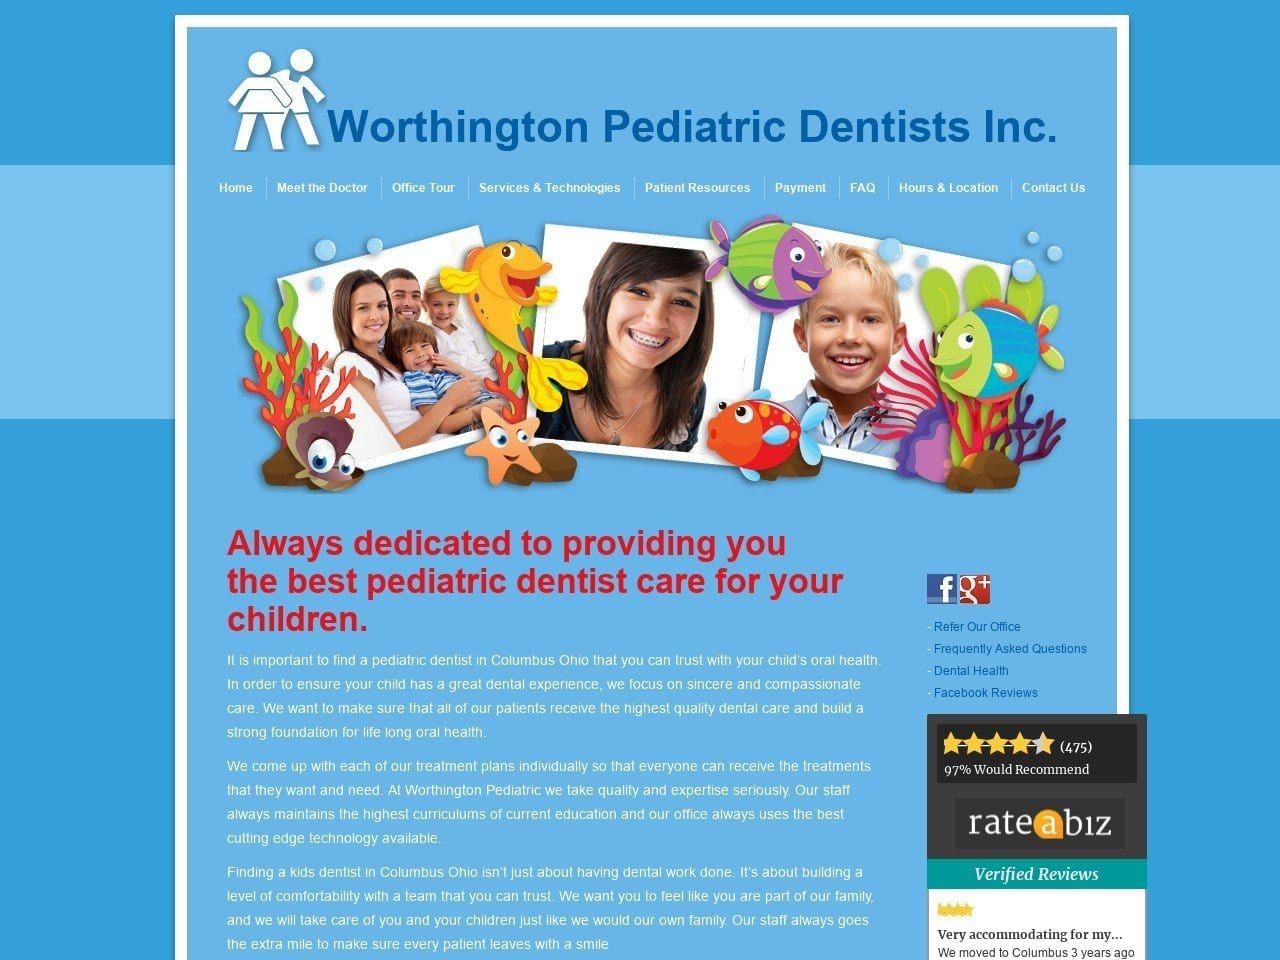 Worthington Pediatric Dentsist Website Screenshot from worthingtonpediatric.com